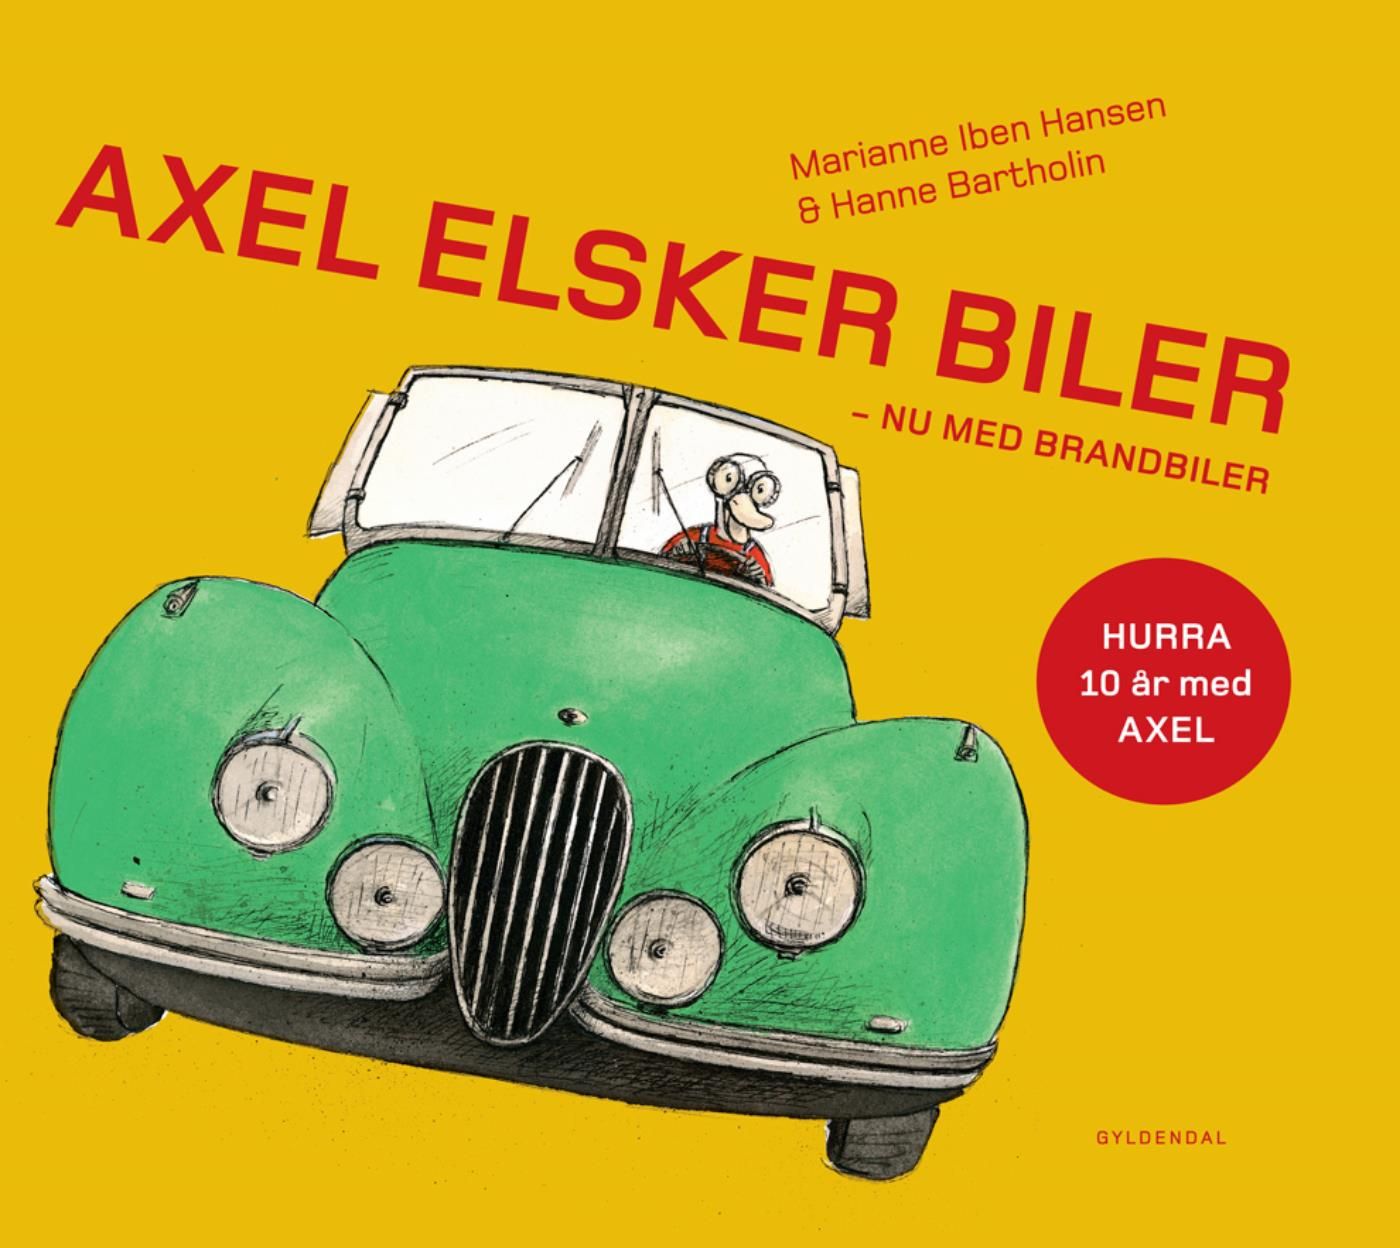 Axel elsker biler - Lyt&læs, eBook by Hanne Bartholin, Marianne Iben Hansen